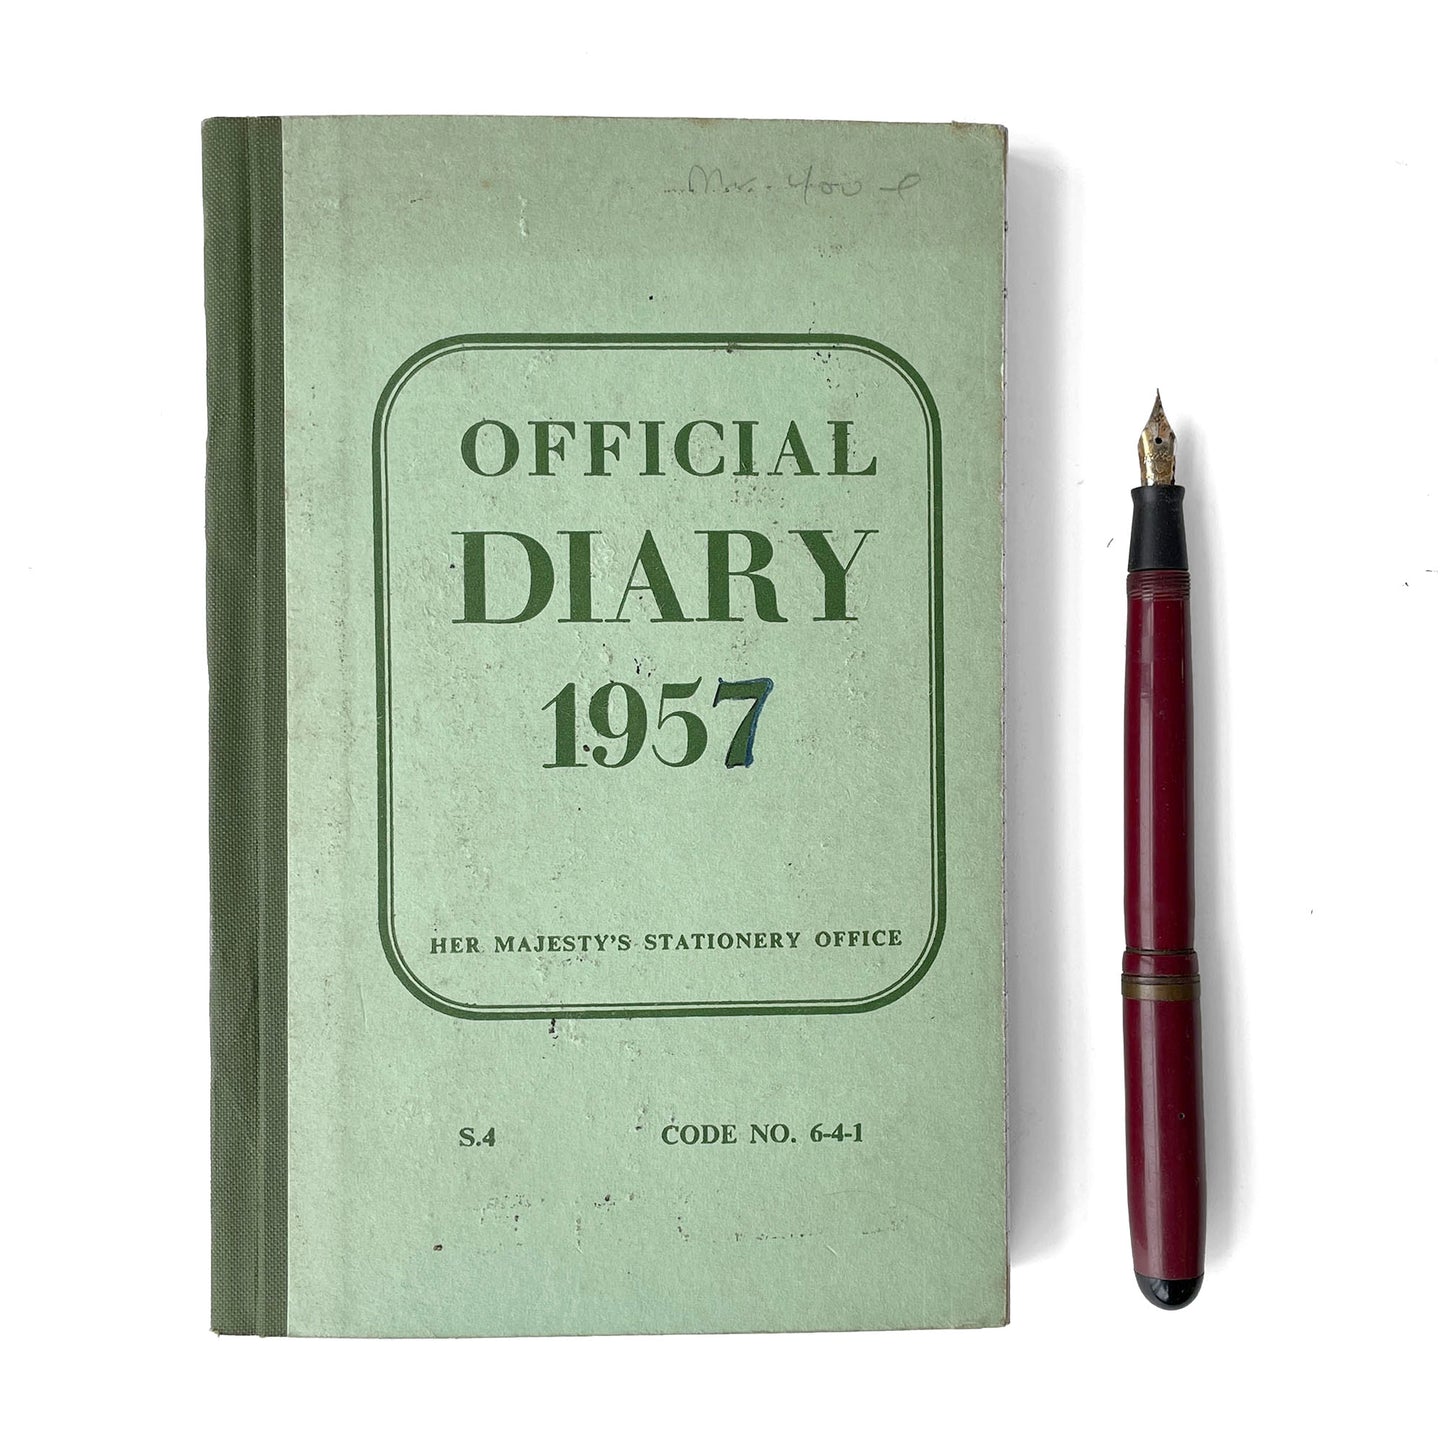 1957 ‘Her Majesty’s Stationery Office’ Diary